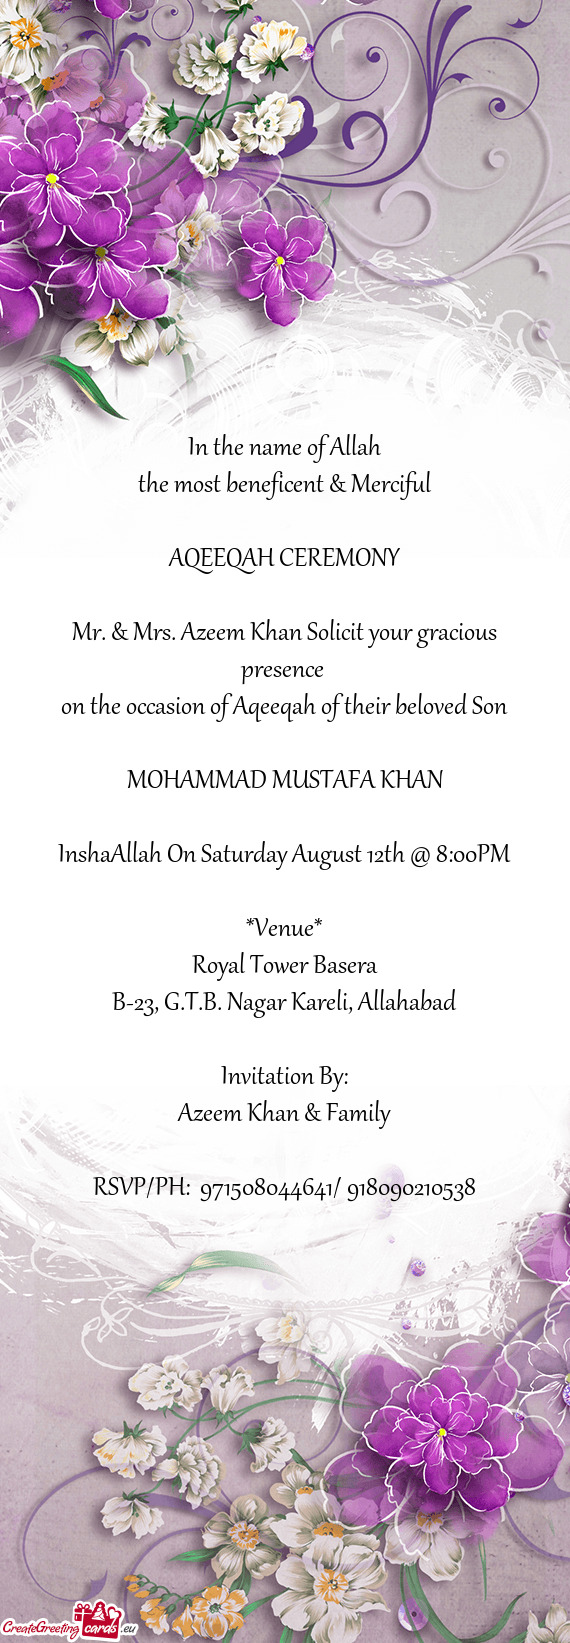 Mr. & Mrs. Azeem Khan Solicit your gracious presence